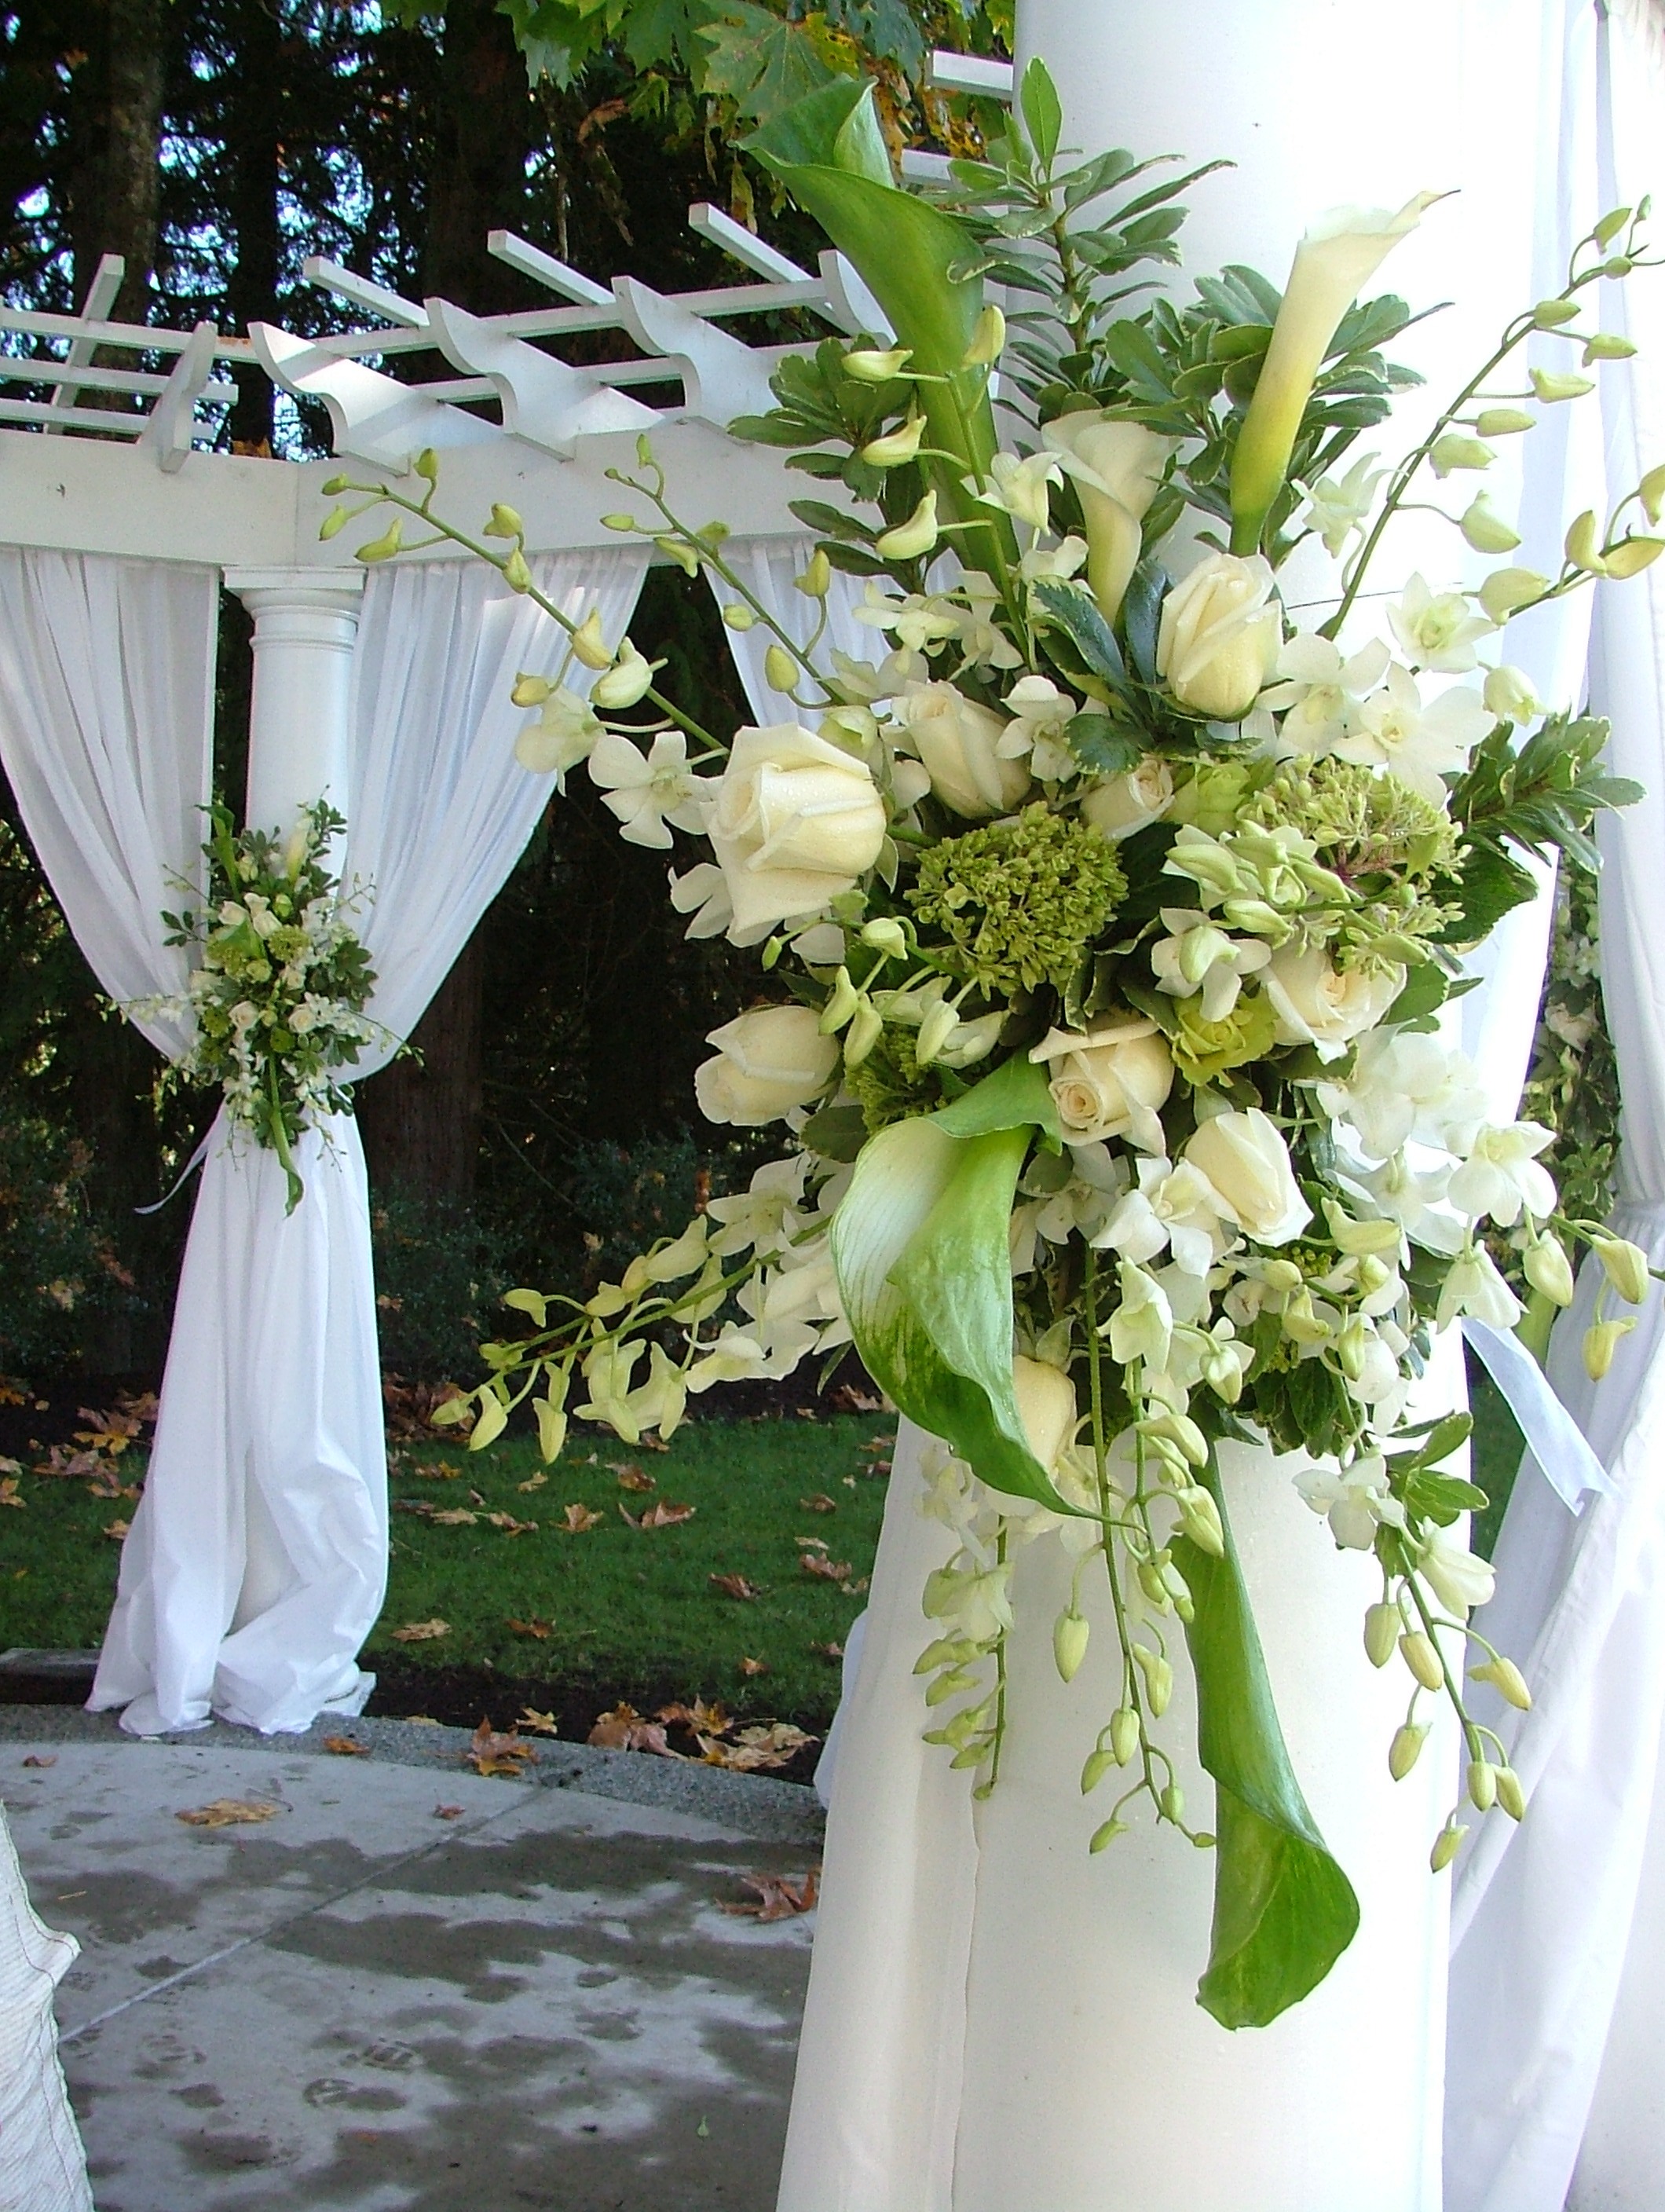 File:White and green floral spray wedding decor.jpg